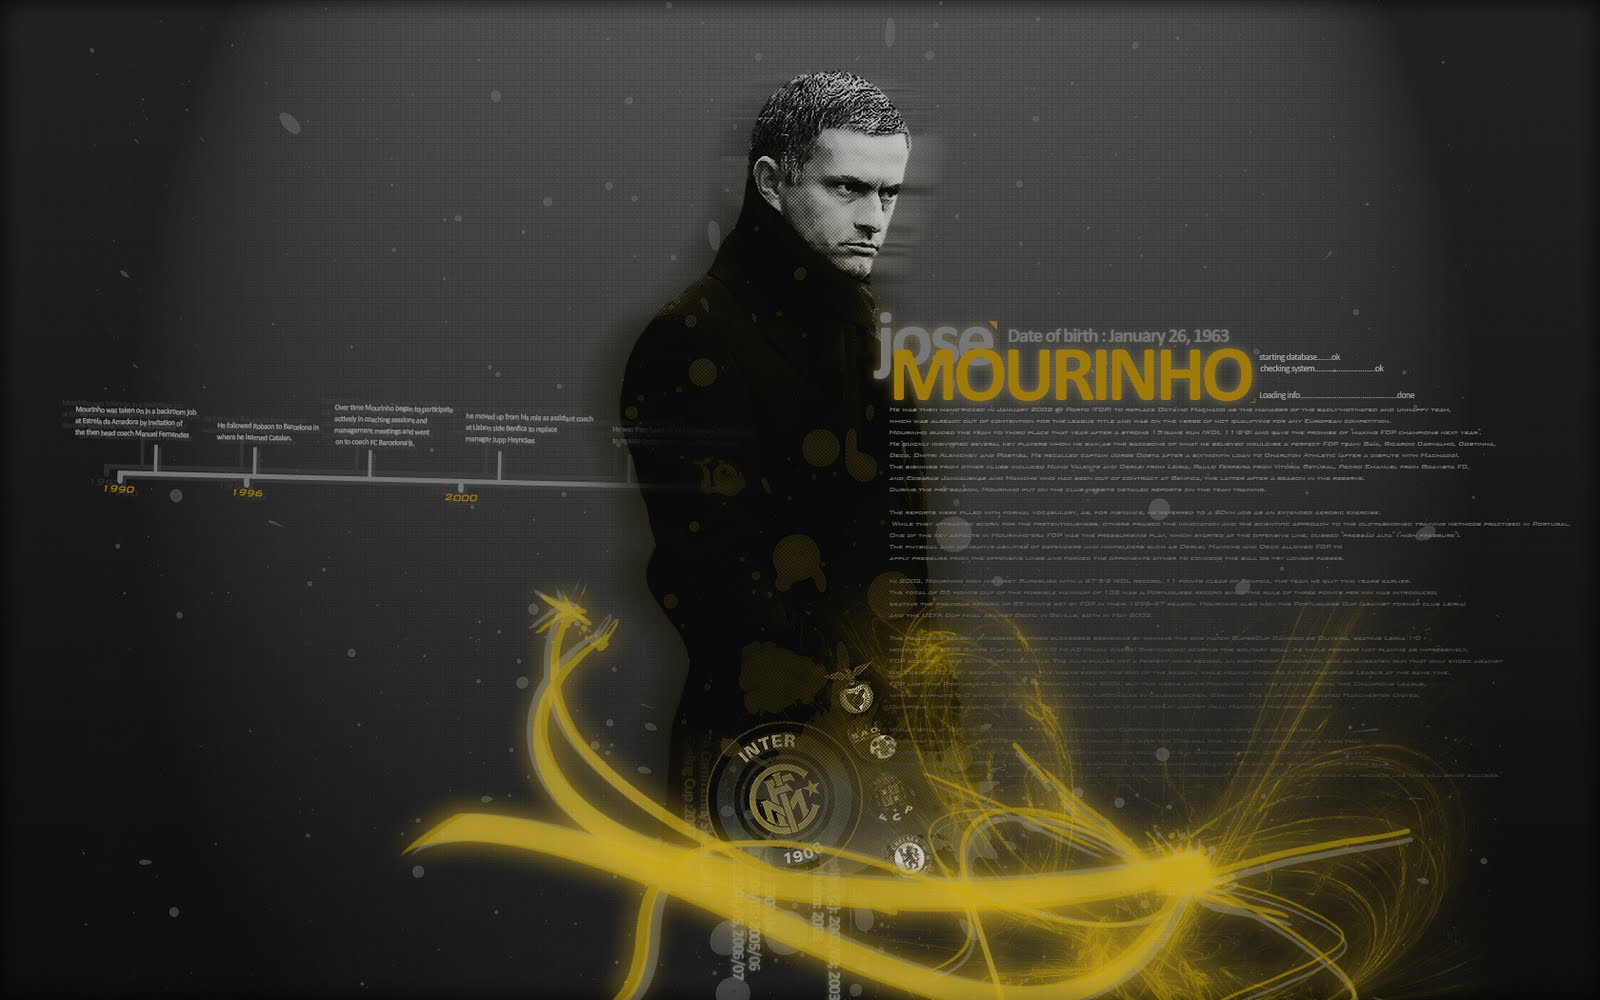 [68+] Jose Mourinho Wallpaper on WallpaperSafari